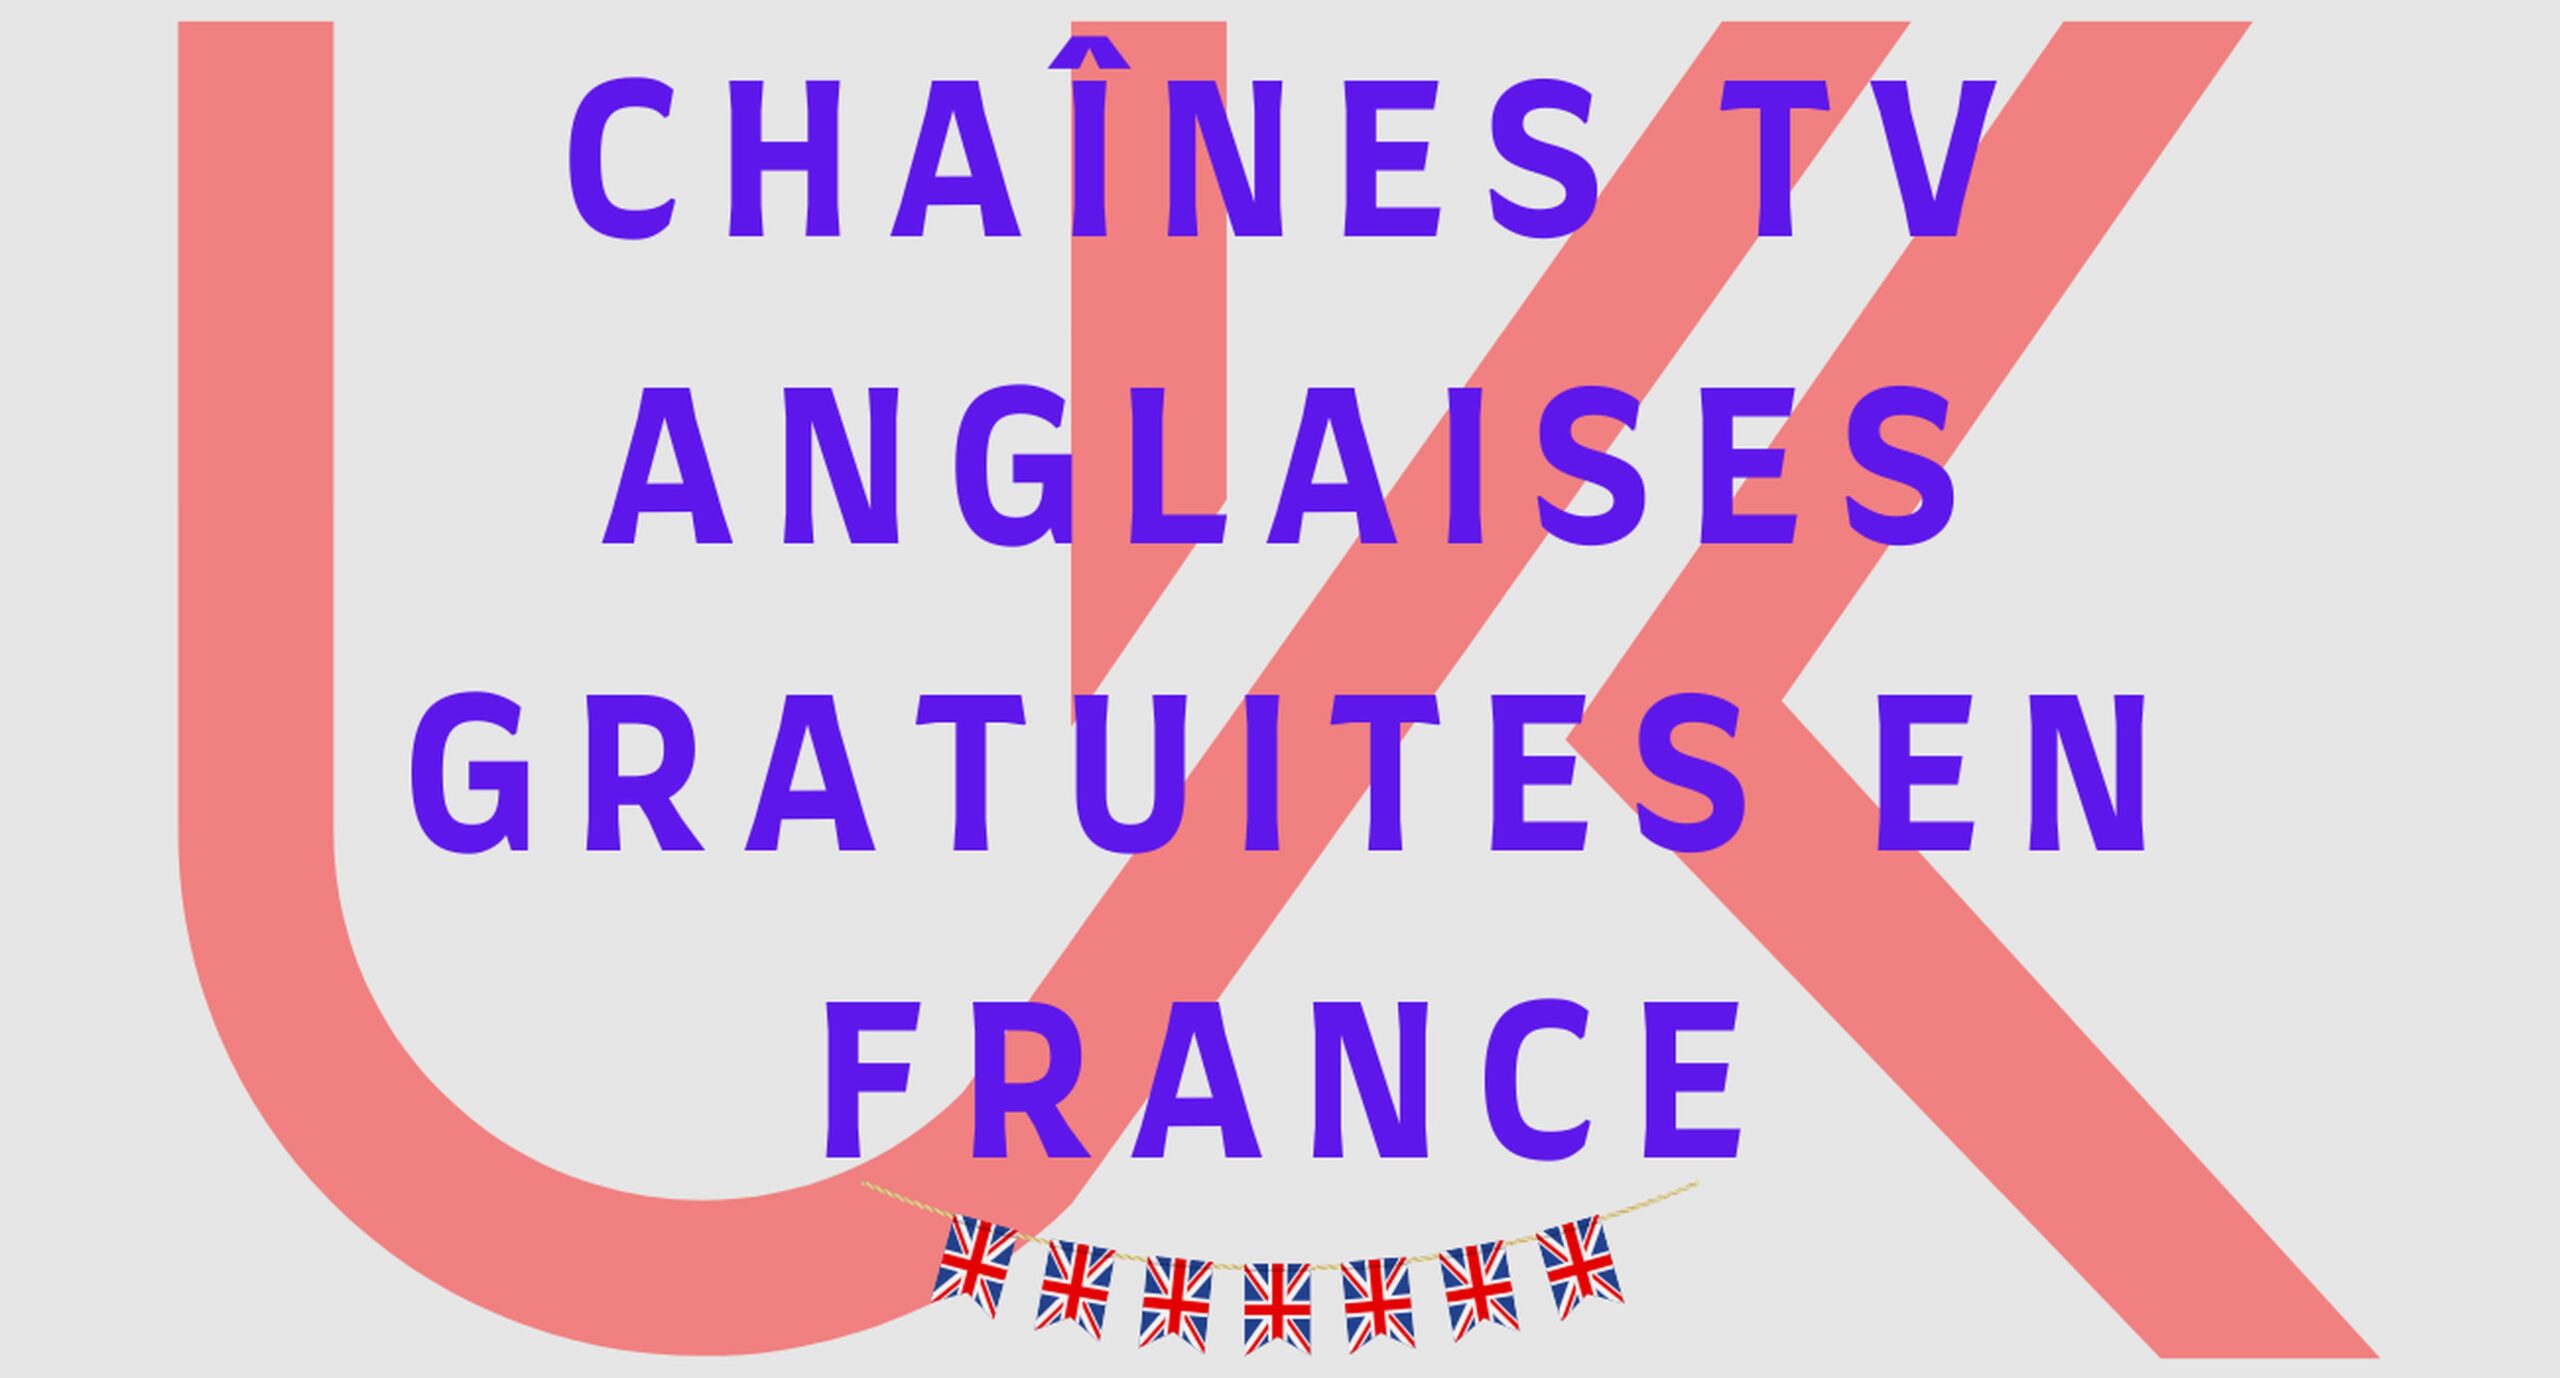 Chaînes TV Anglaises gratuites en France - 55 Chaînes TV disponibles 17